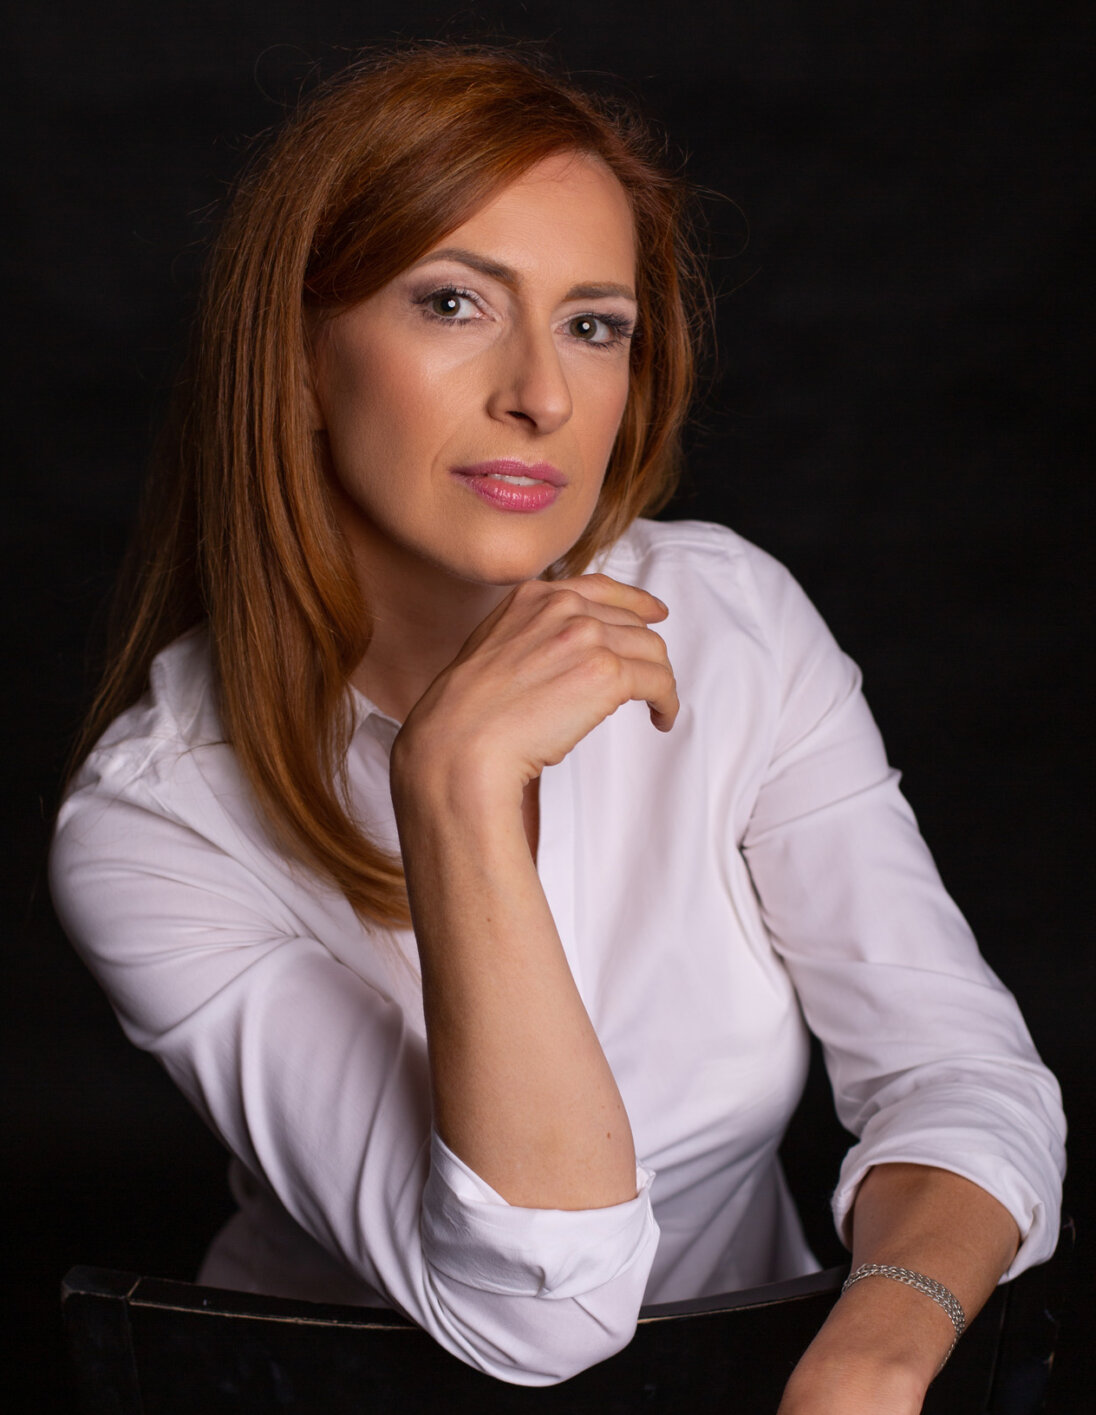 Aleksandra Godlewska